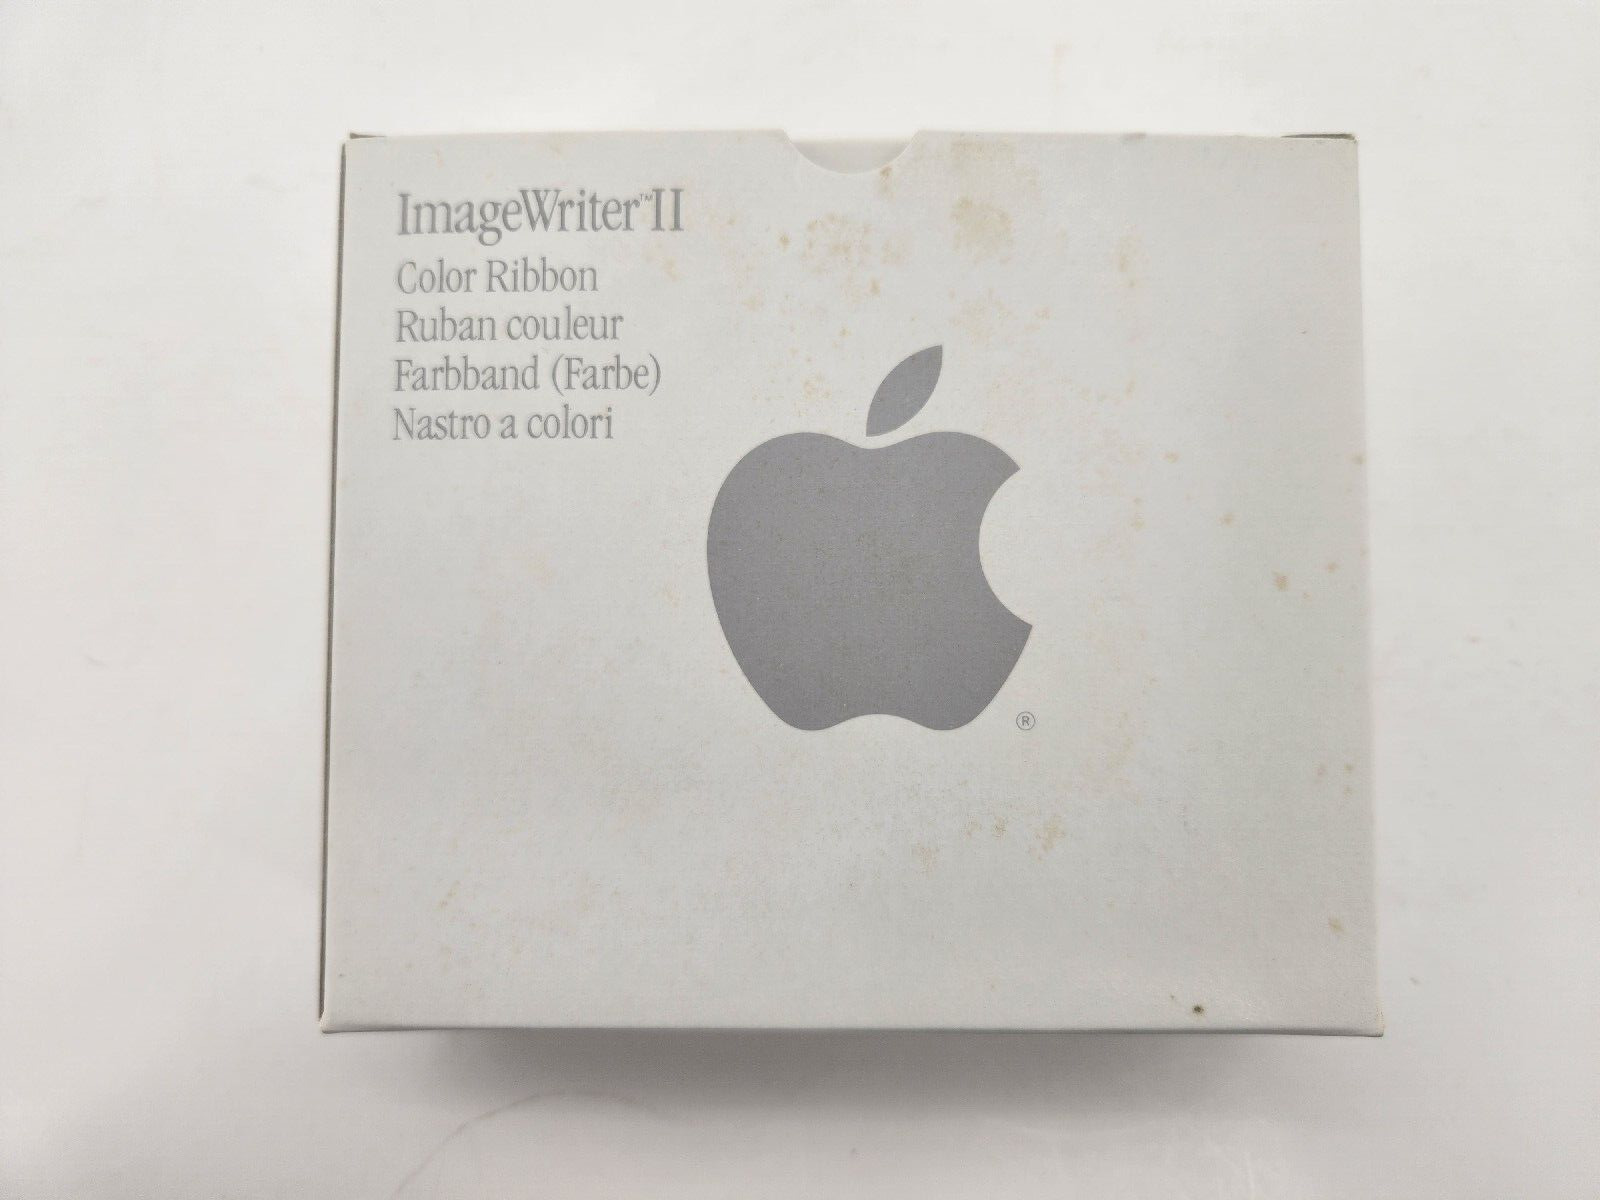 Rare Vintage Original Apple ImageWriter II Color Ribbon— NEW /sealed  942-0778-A